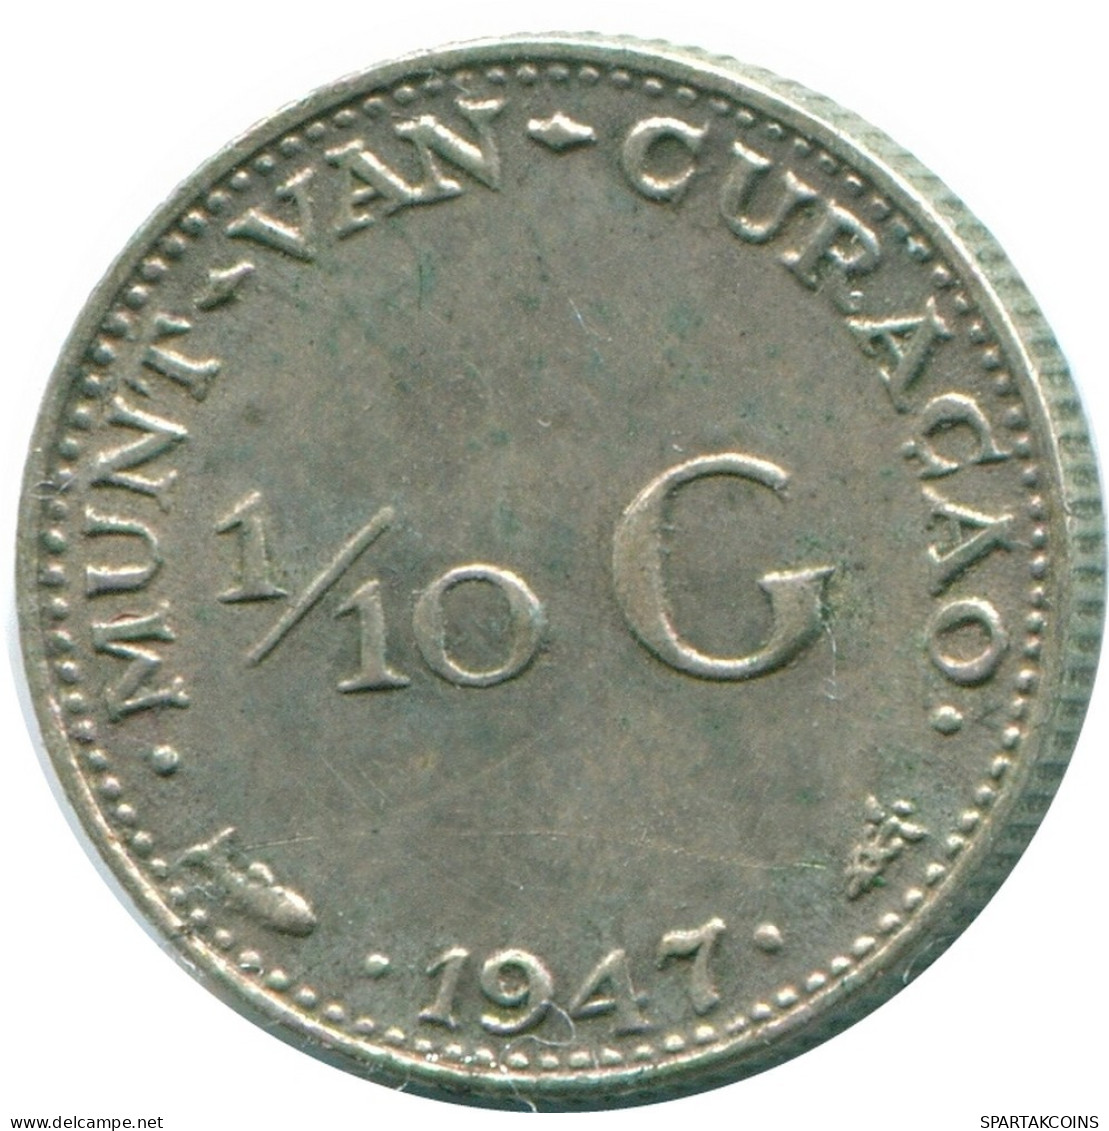 1/10 GULDEN 1947 CURACAO Netherlands SILVER Colonial Coin #NL11828.3.U.A - Curacao